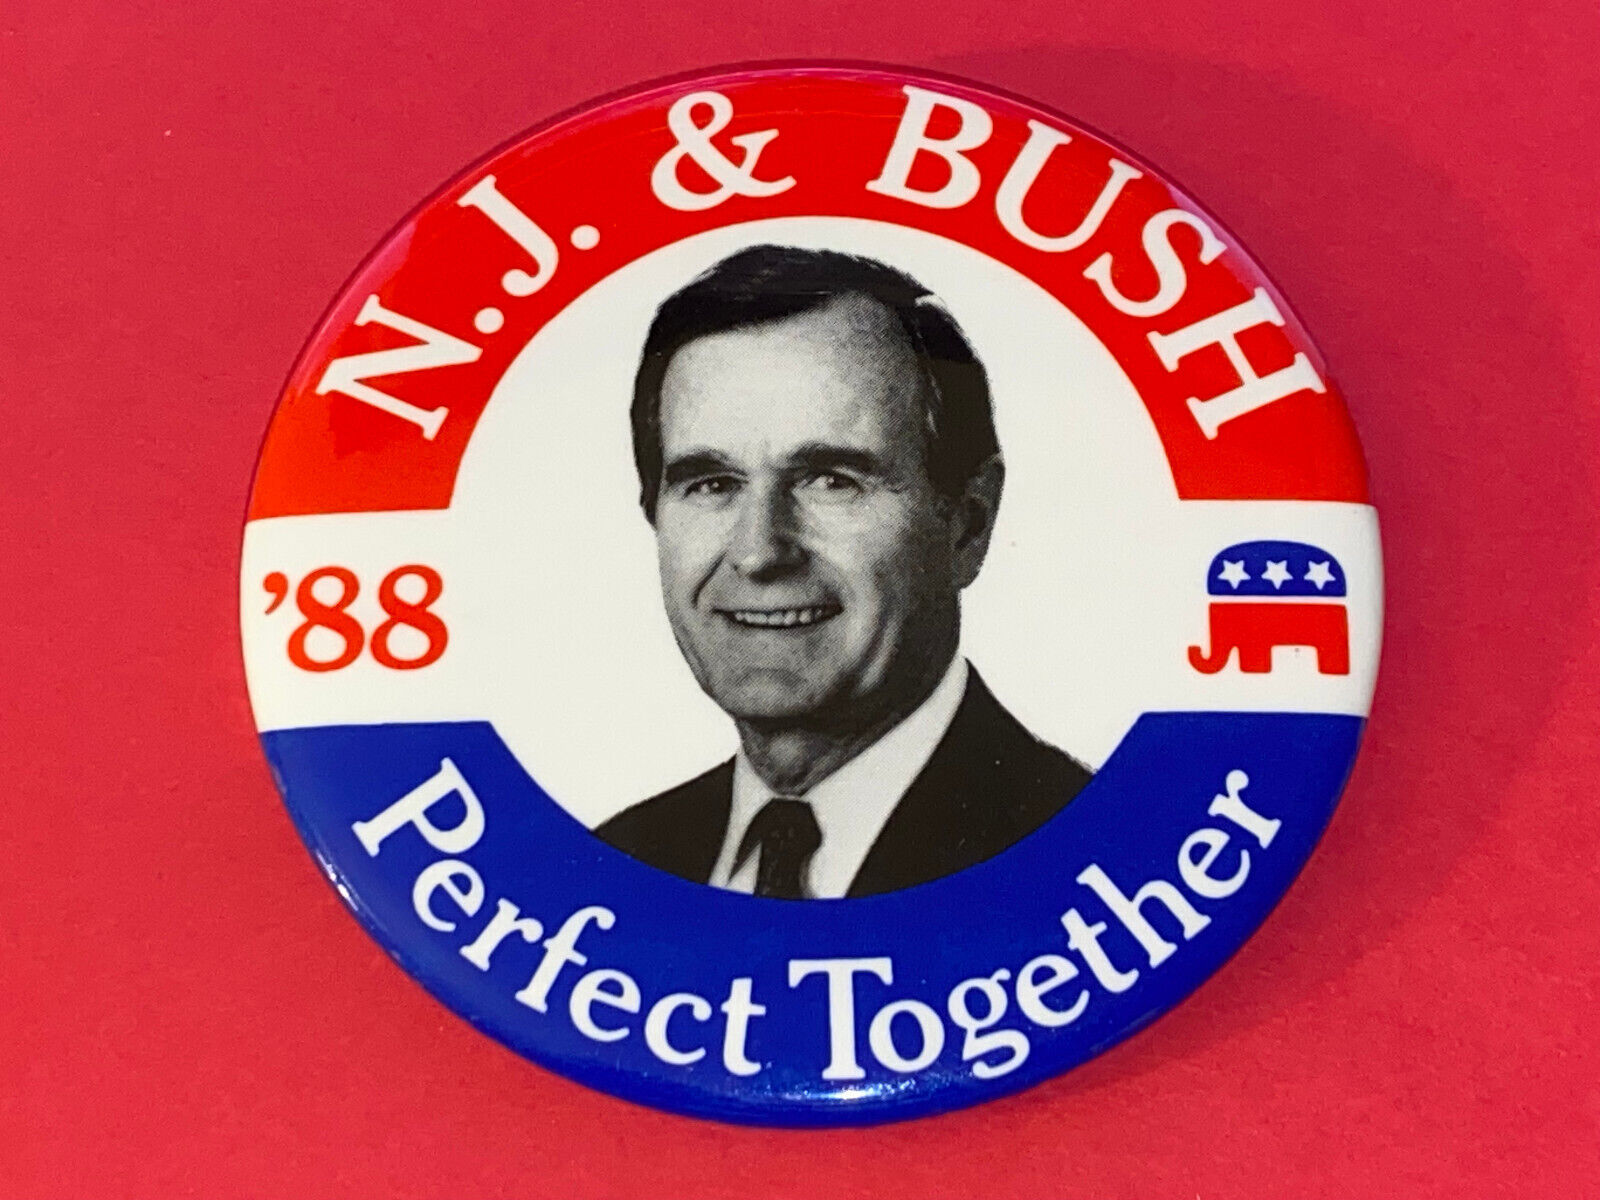 George Bush Campaign Pin President 1988 NJ Bush Perfect Together Button Vintage